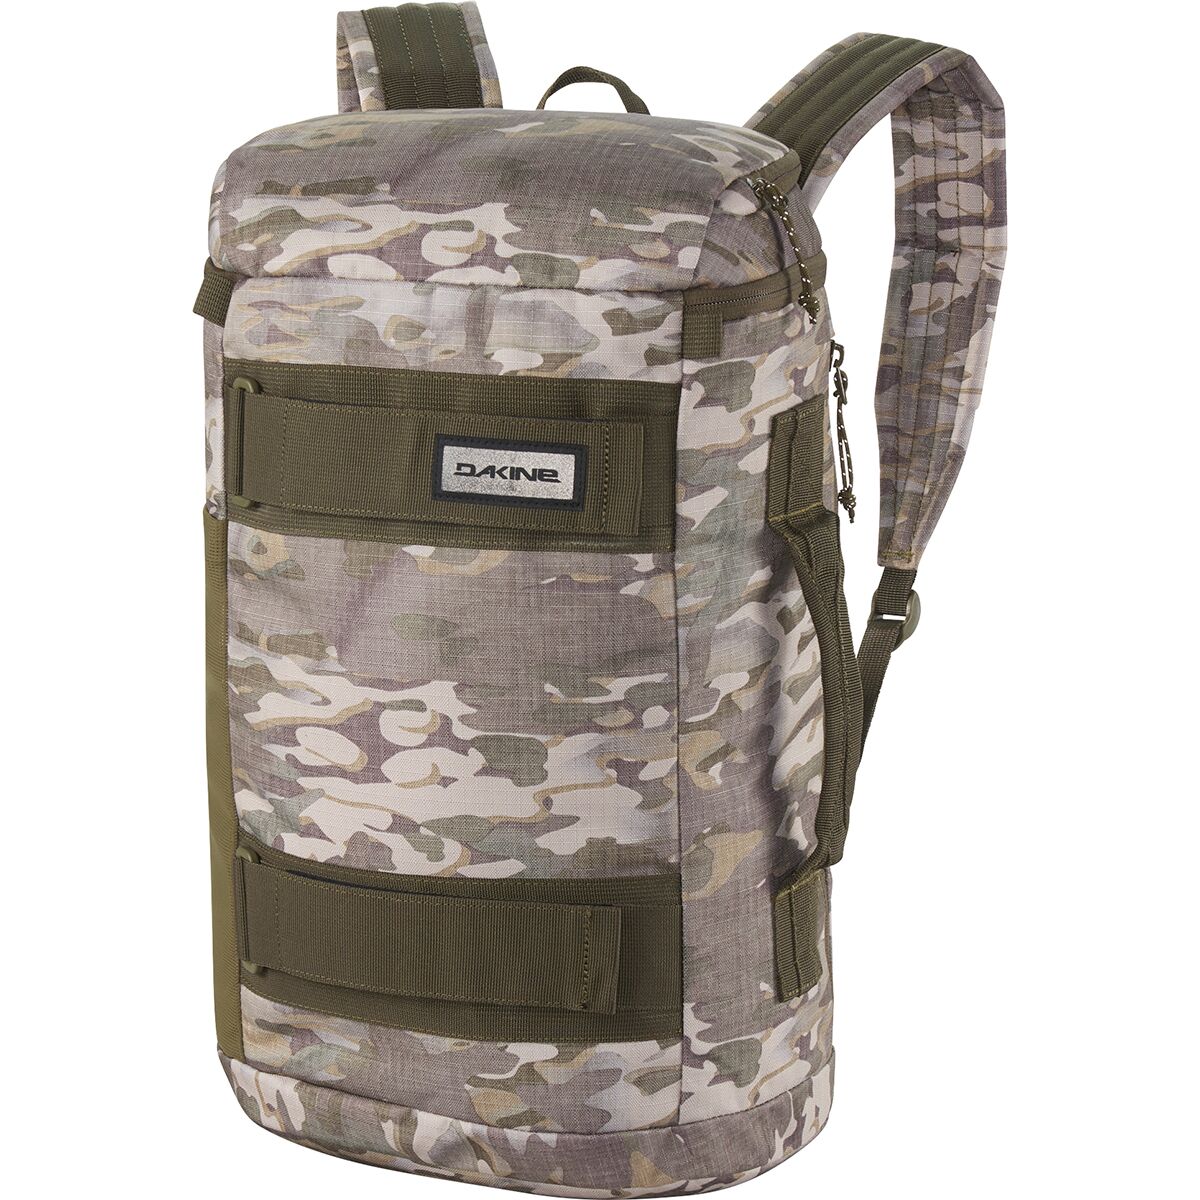 Dakine Mission Street Pack DLX 32L Backpack